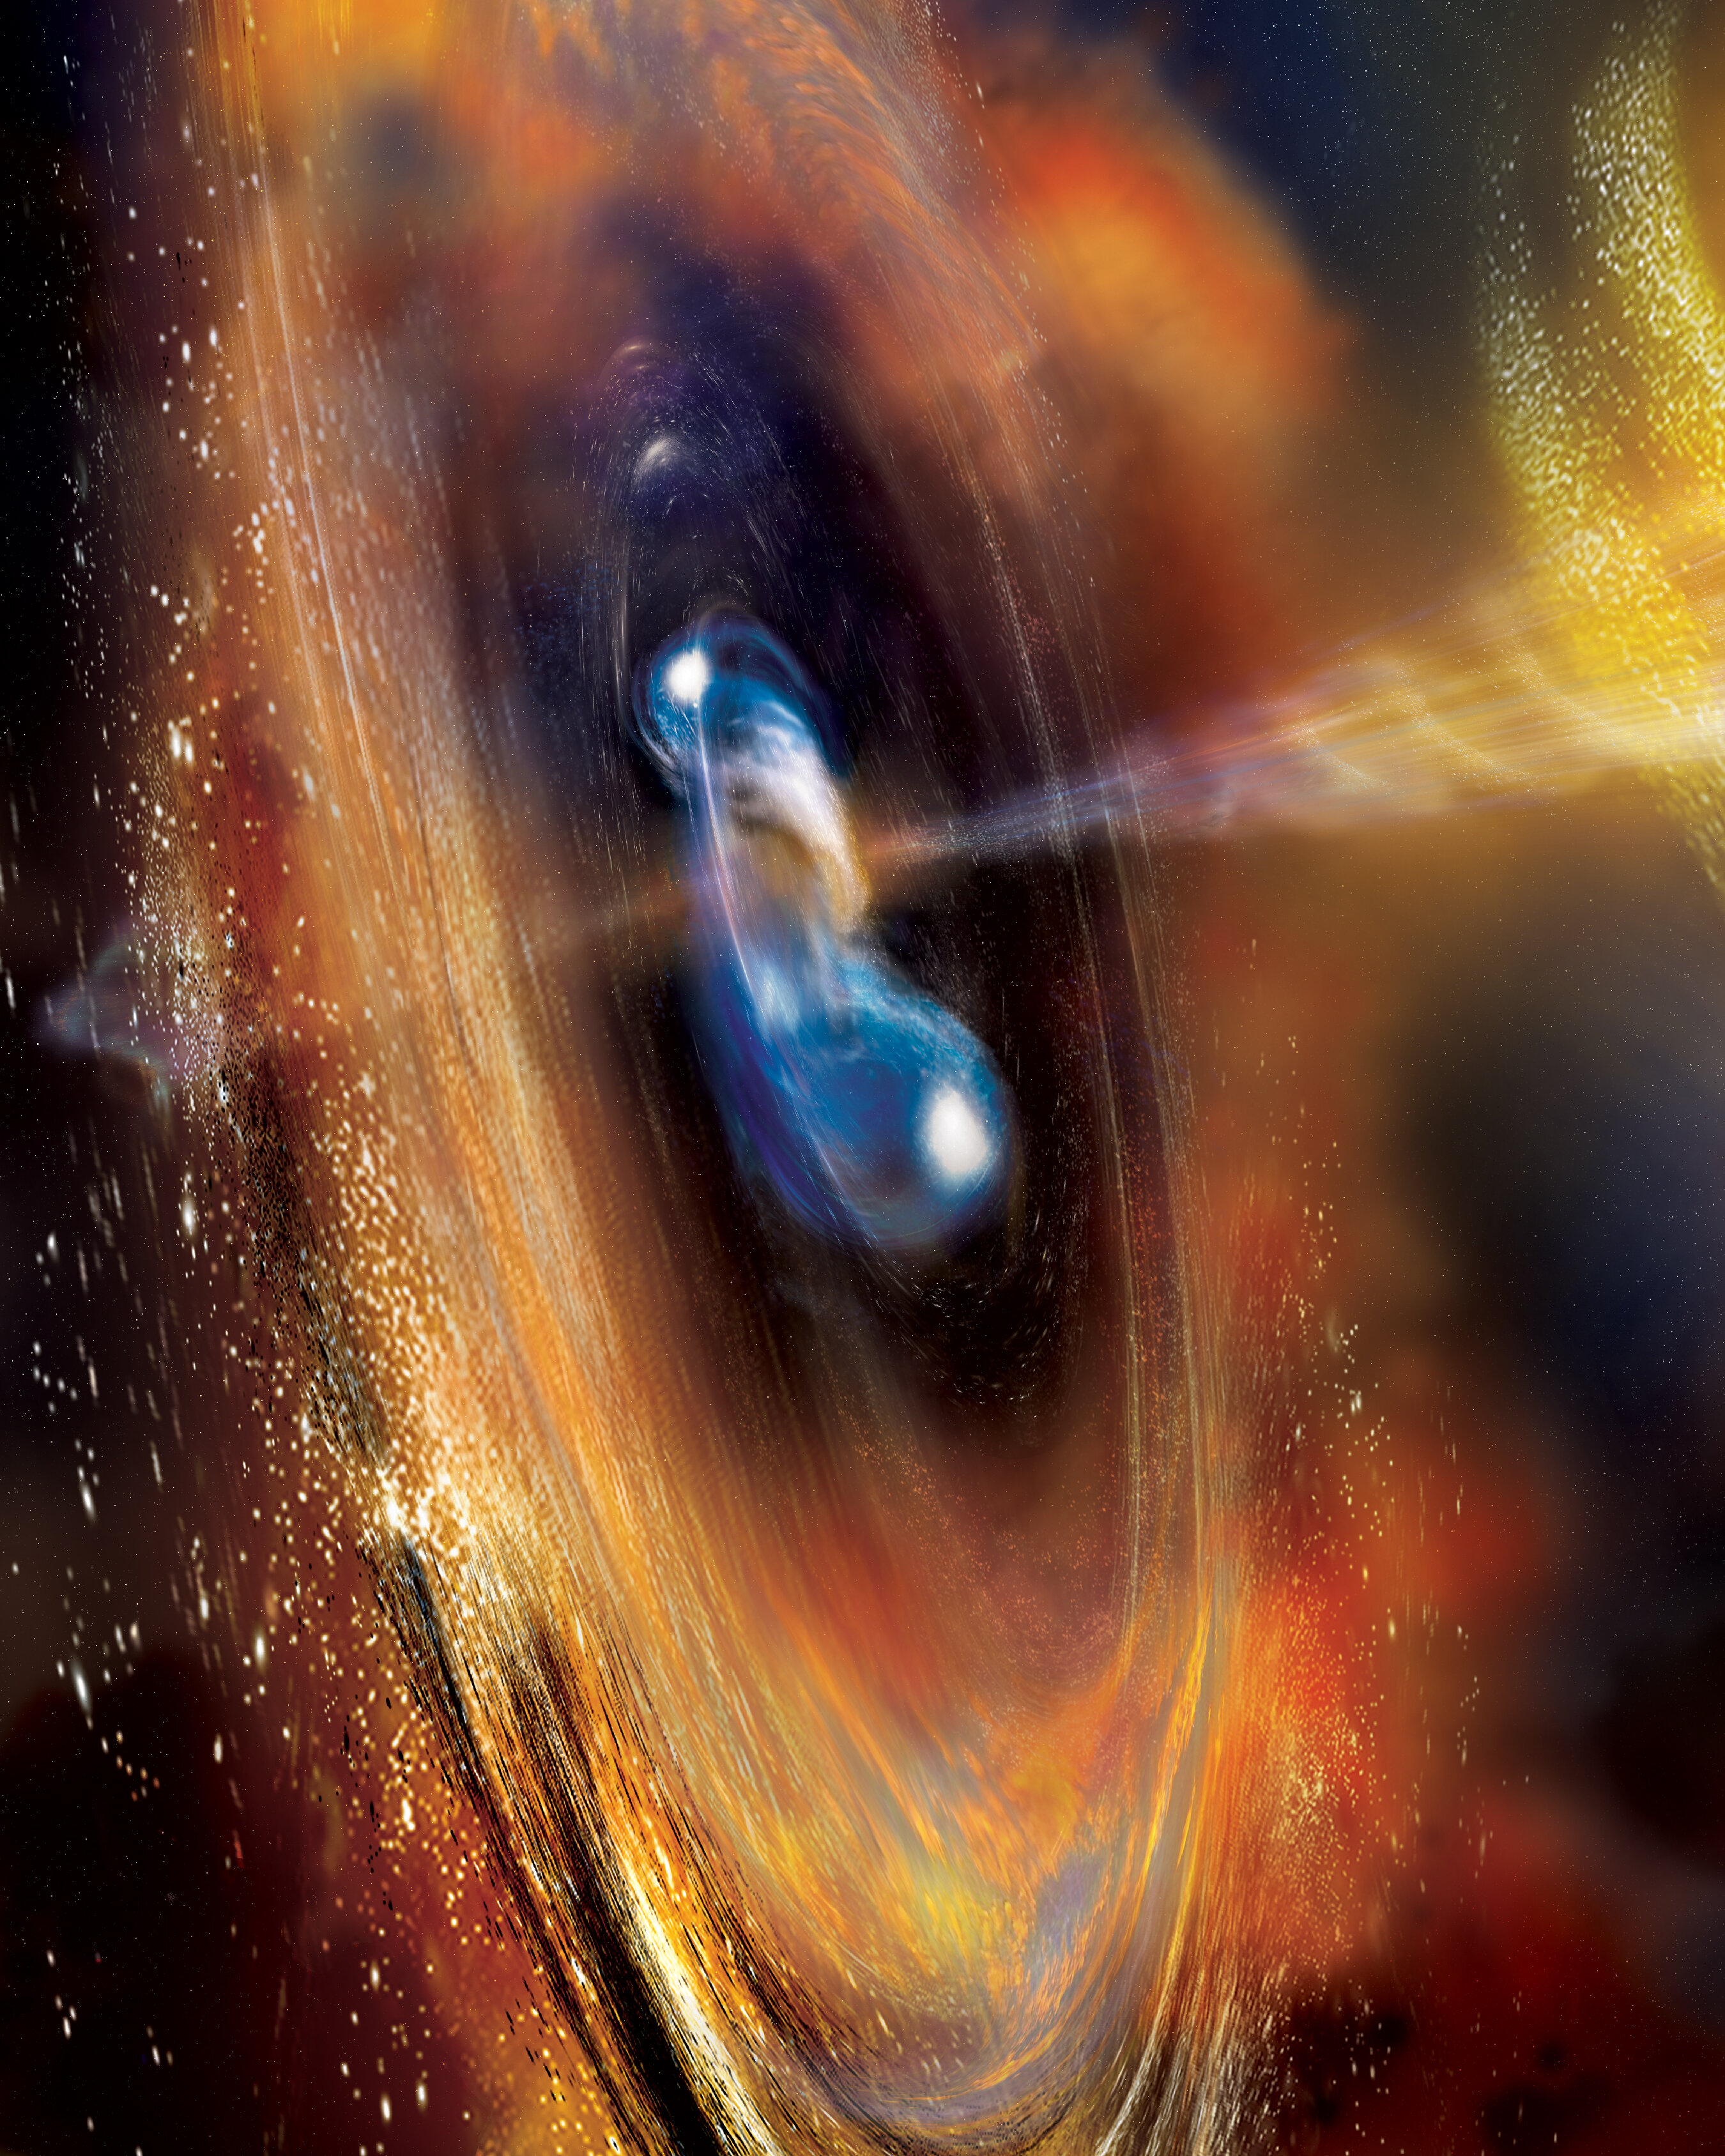 Collision Sequence for a Magnetar-Powered Kilonova Blast